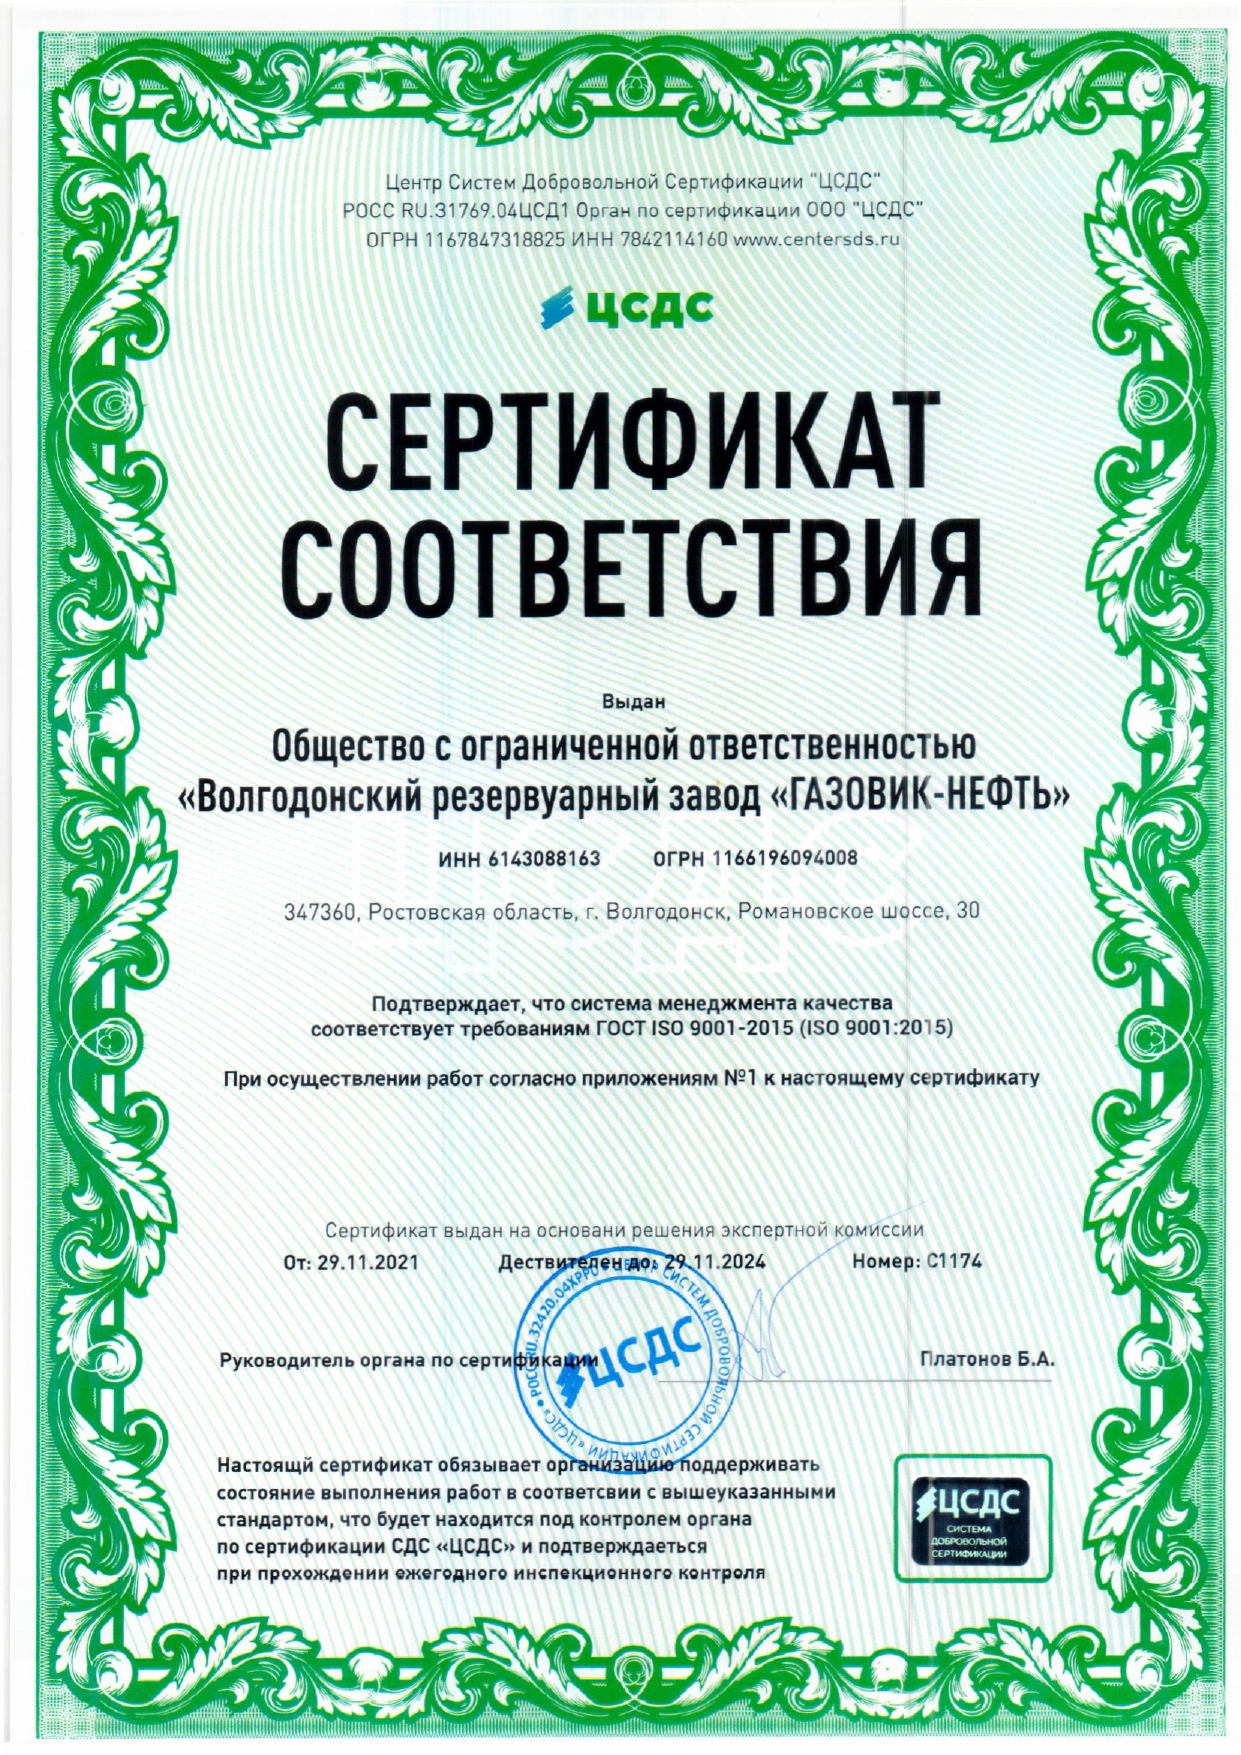 Сертифика соответствия ГОСТ№ 9001-2015